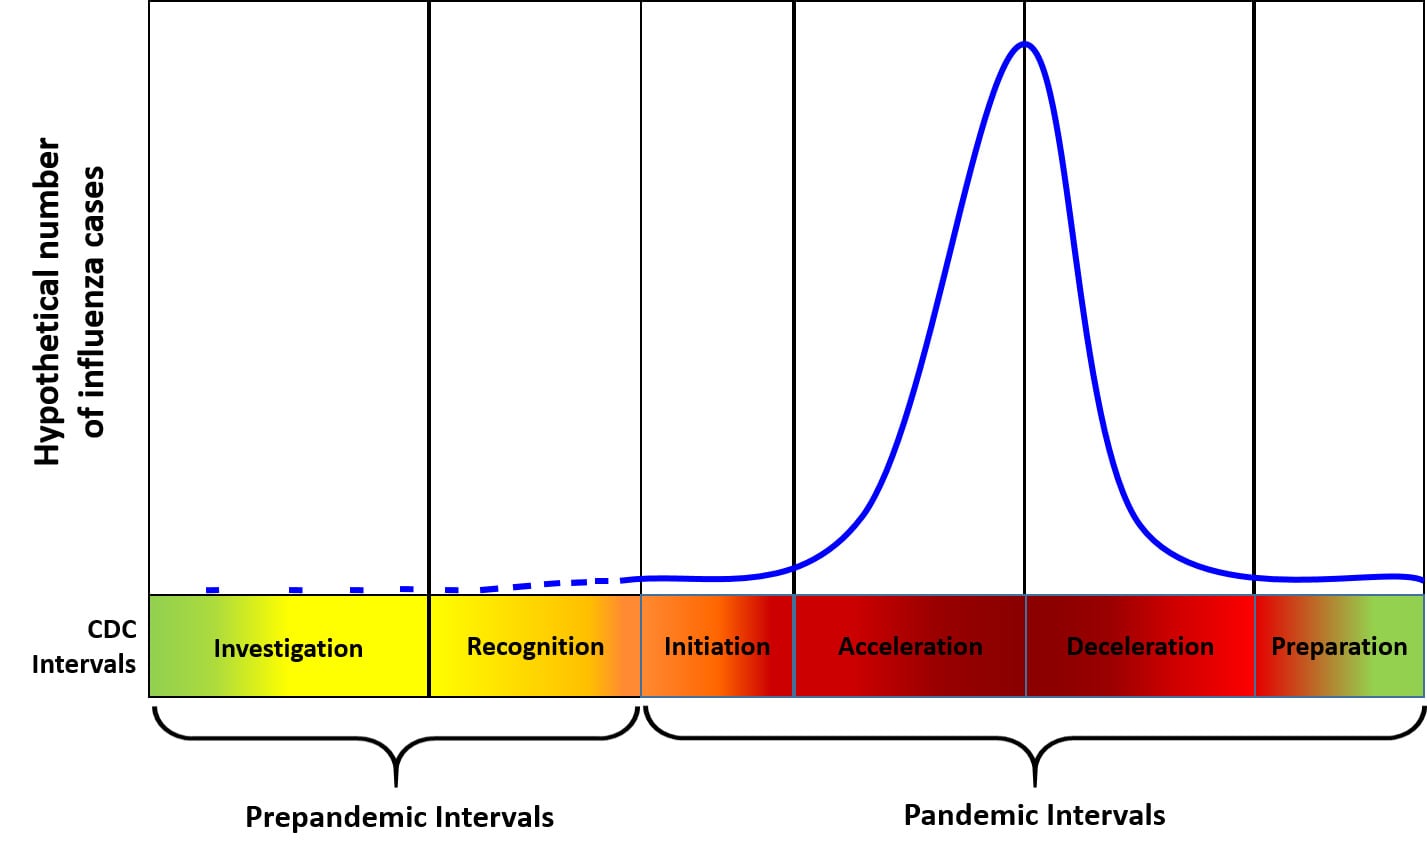 Figure 1. Preparedness and response framework for novel influenza A virus pandemics: CDC intervals